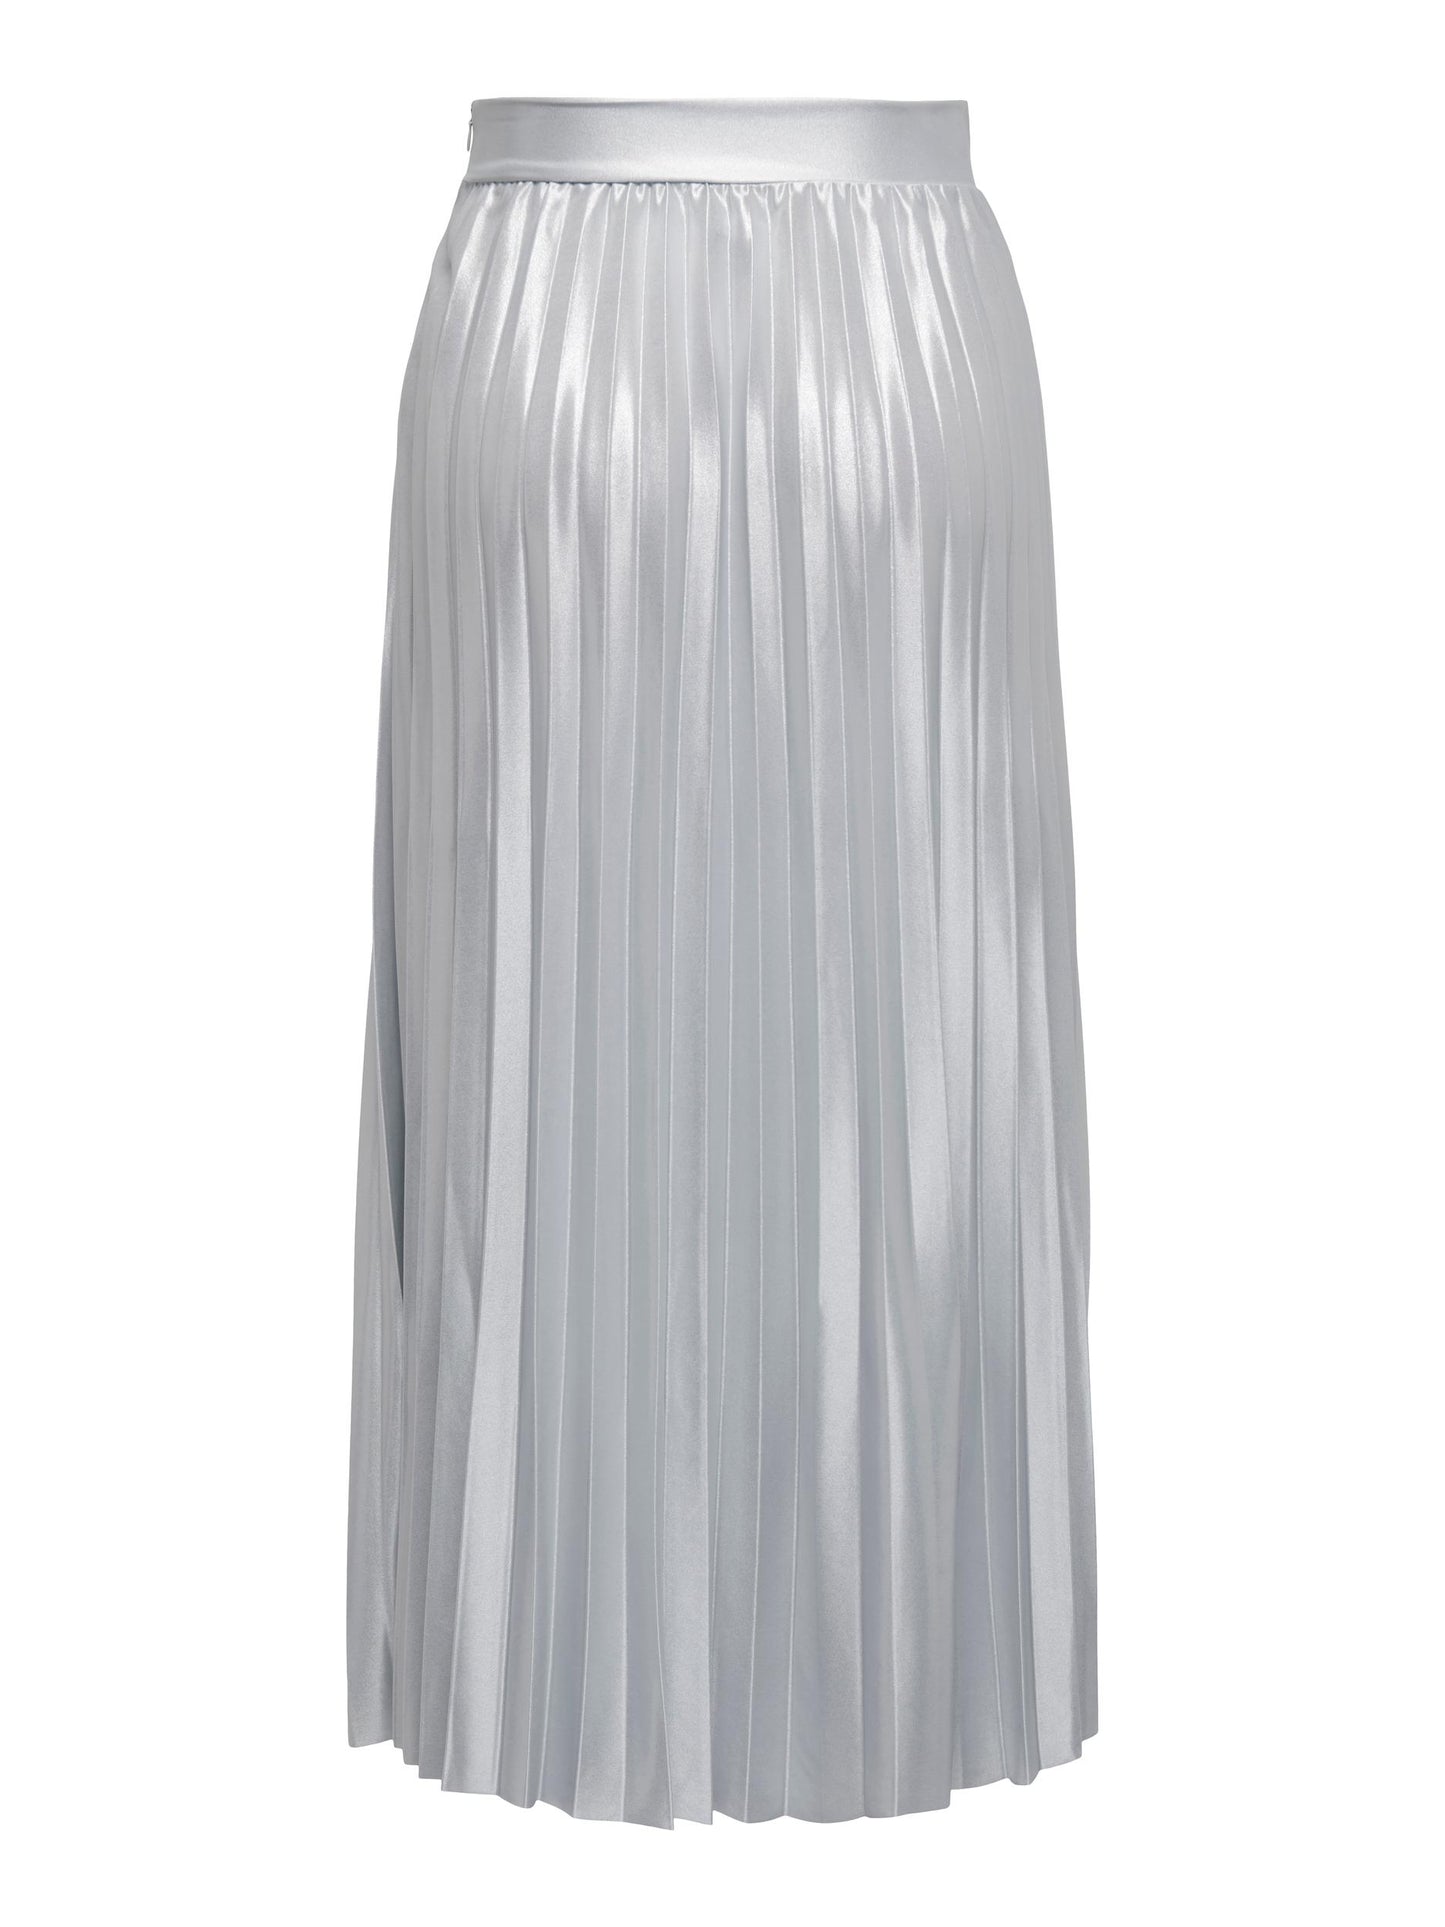 Hailey Pleated Skirt - Silver Metallic